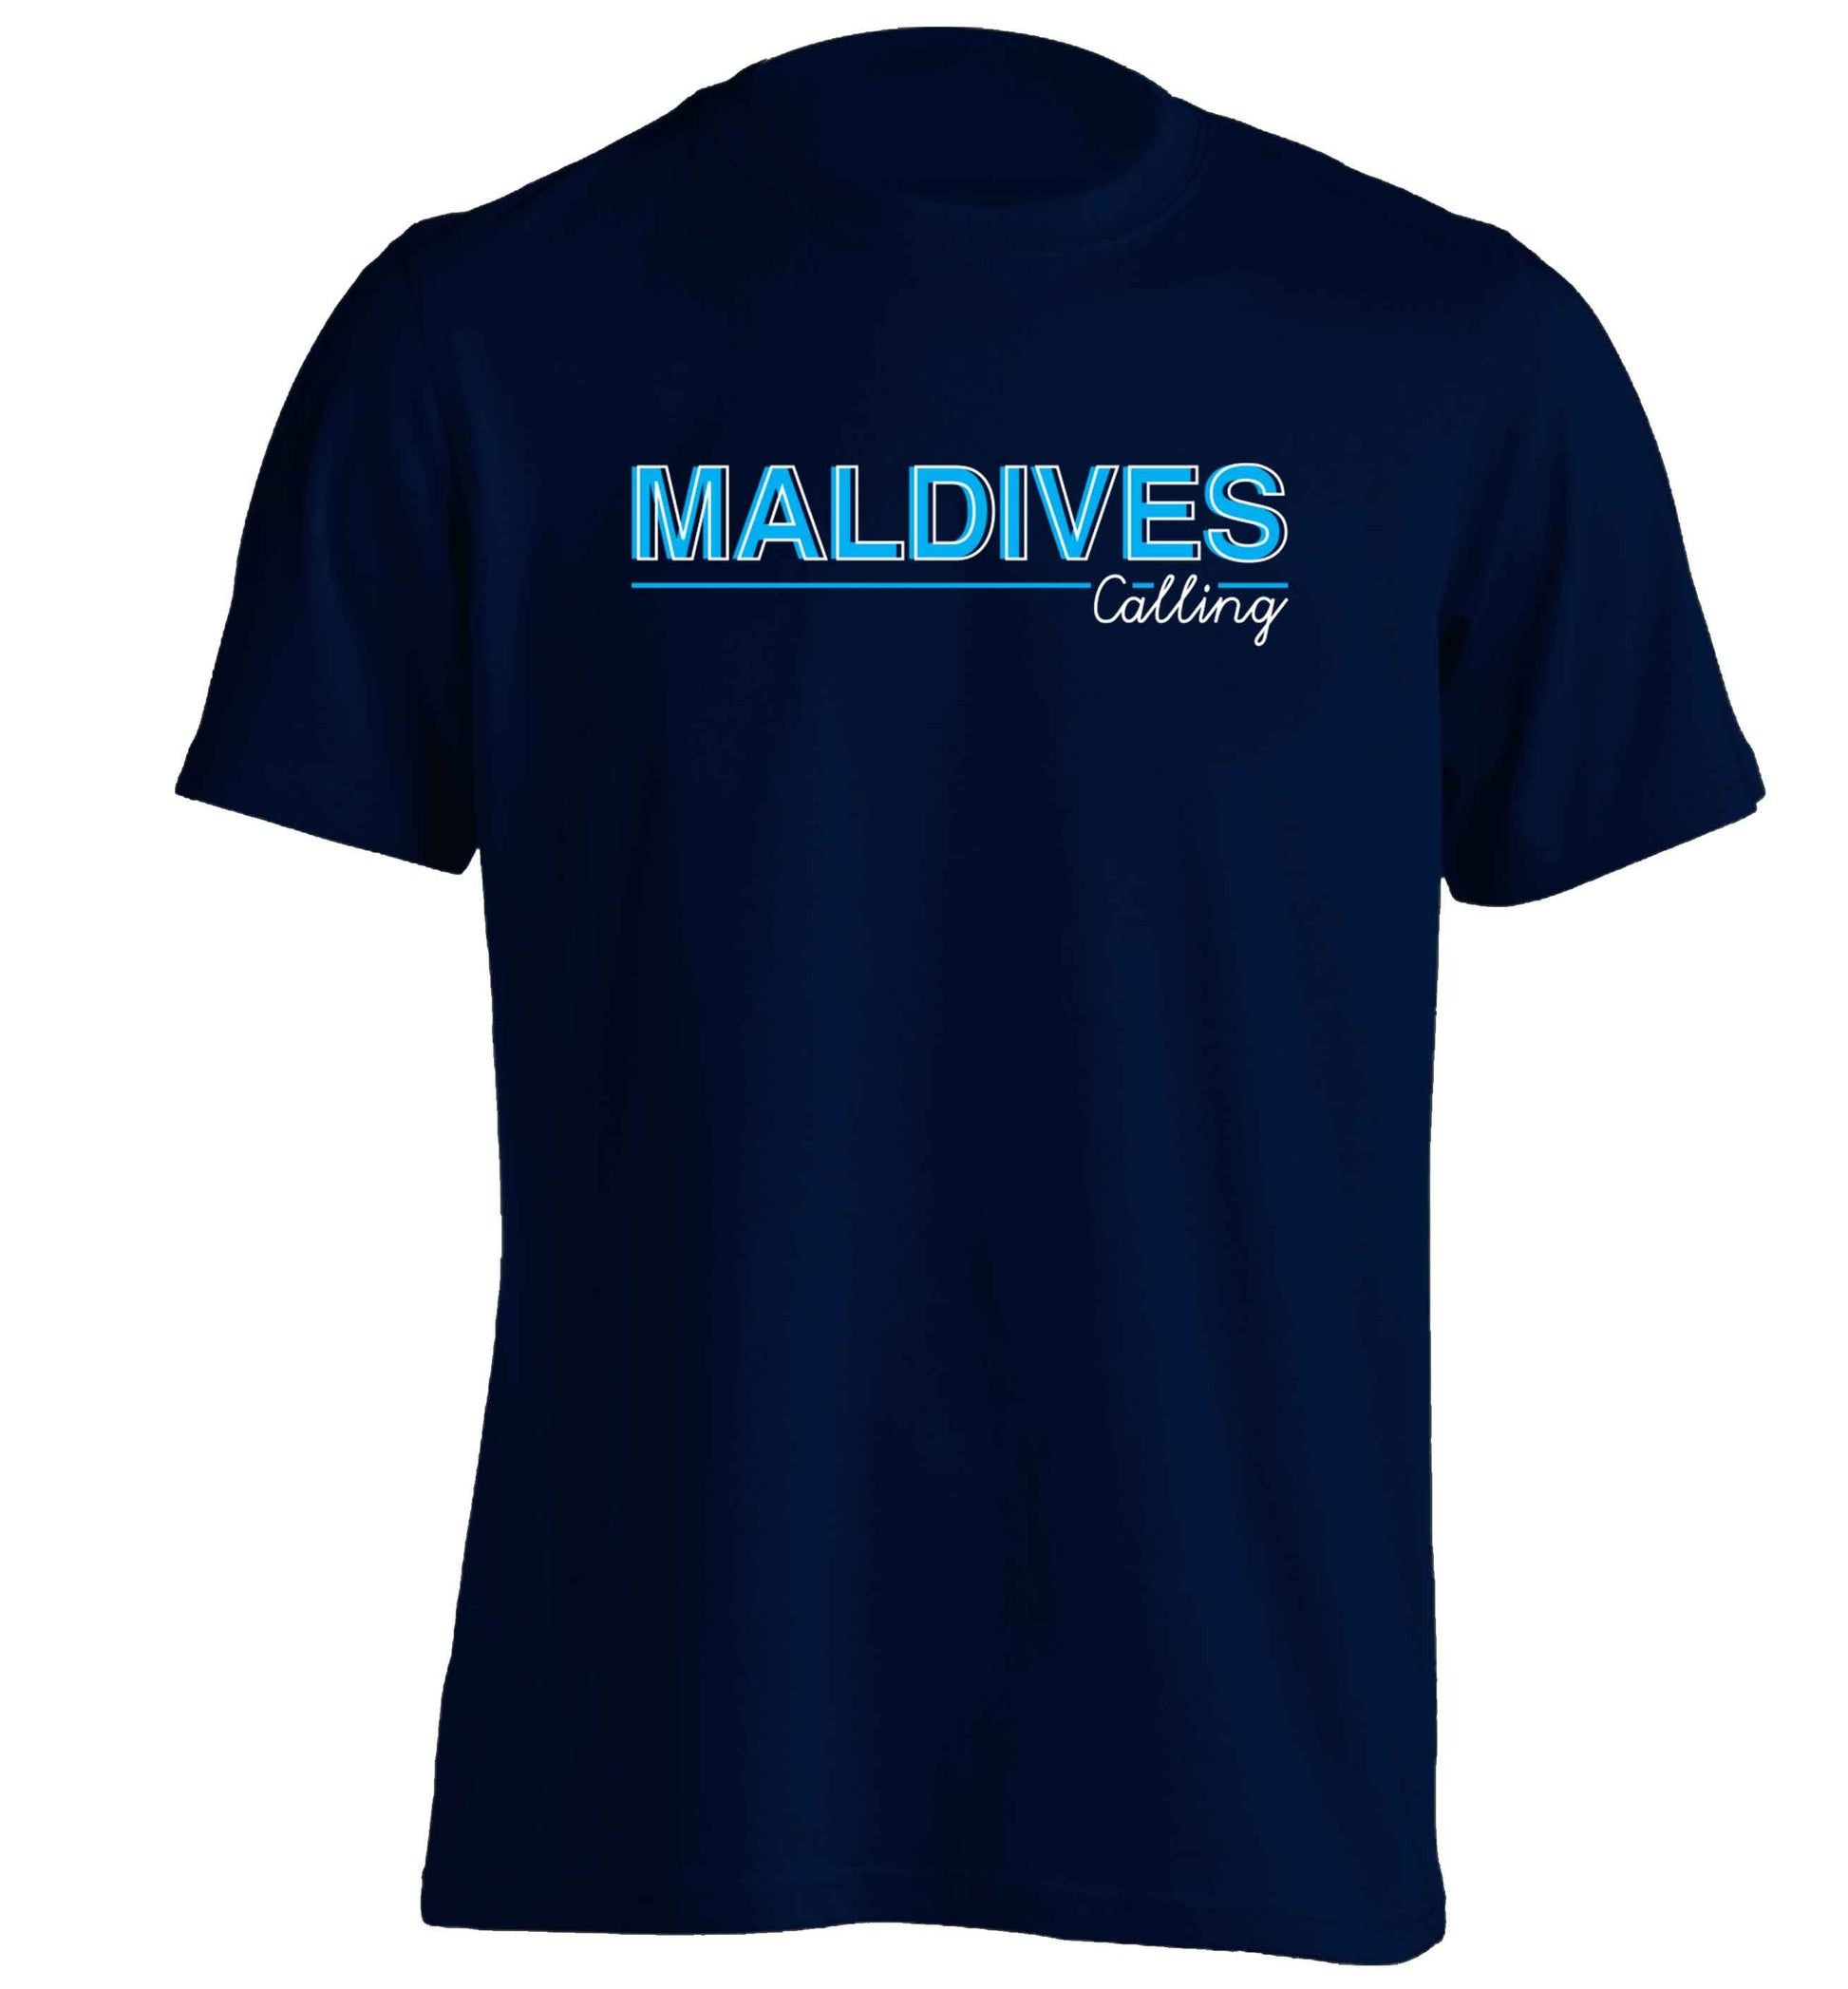 Maldives calling adults unisex navy Tshirt 2XL